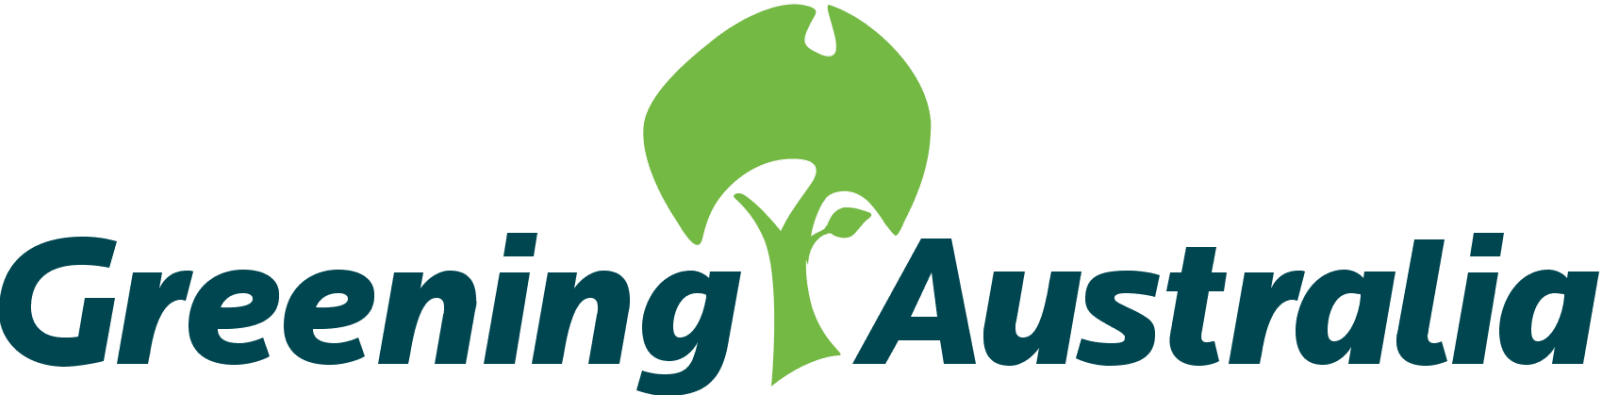 Greening Australia logo